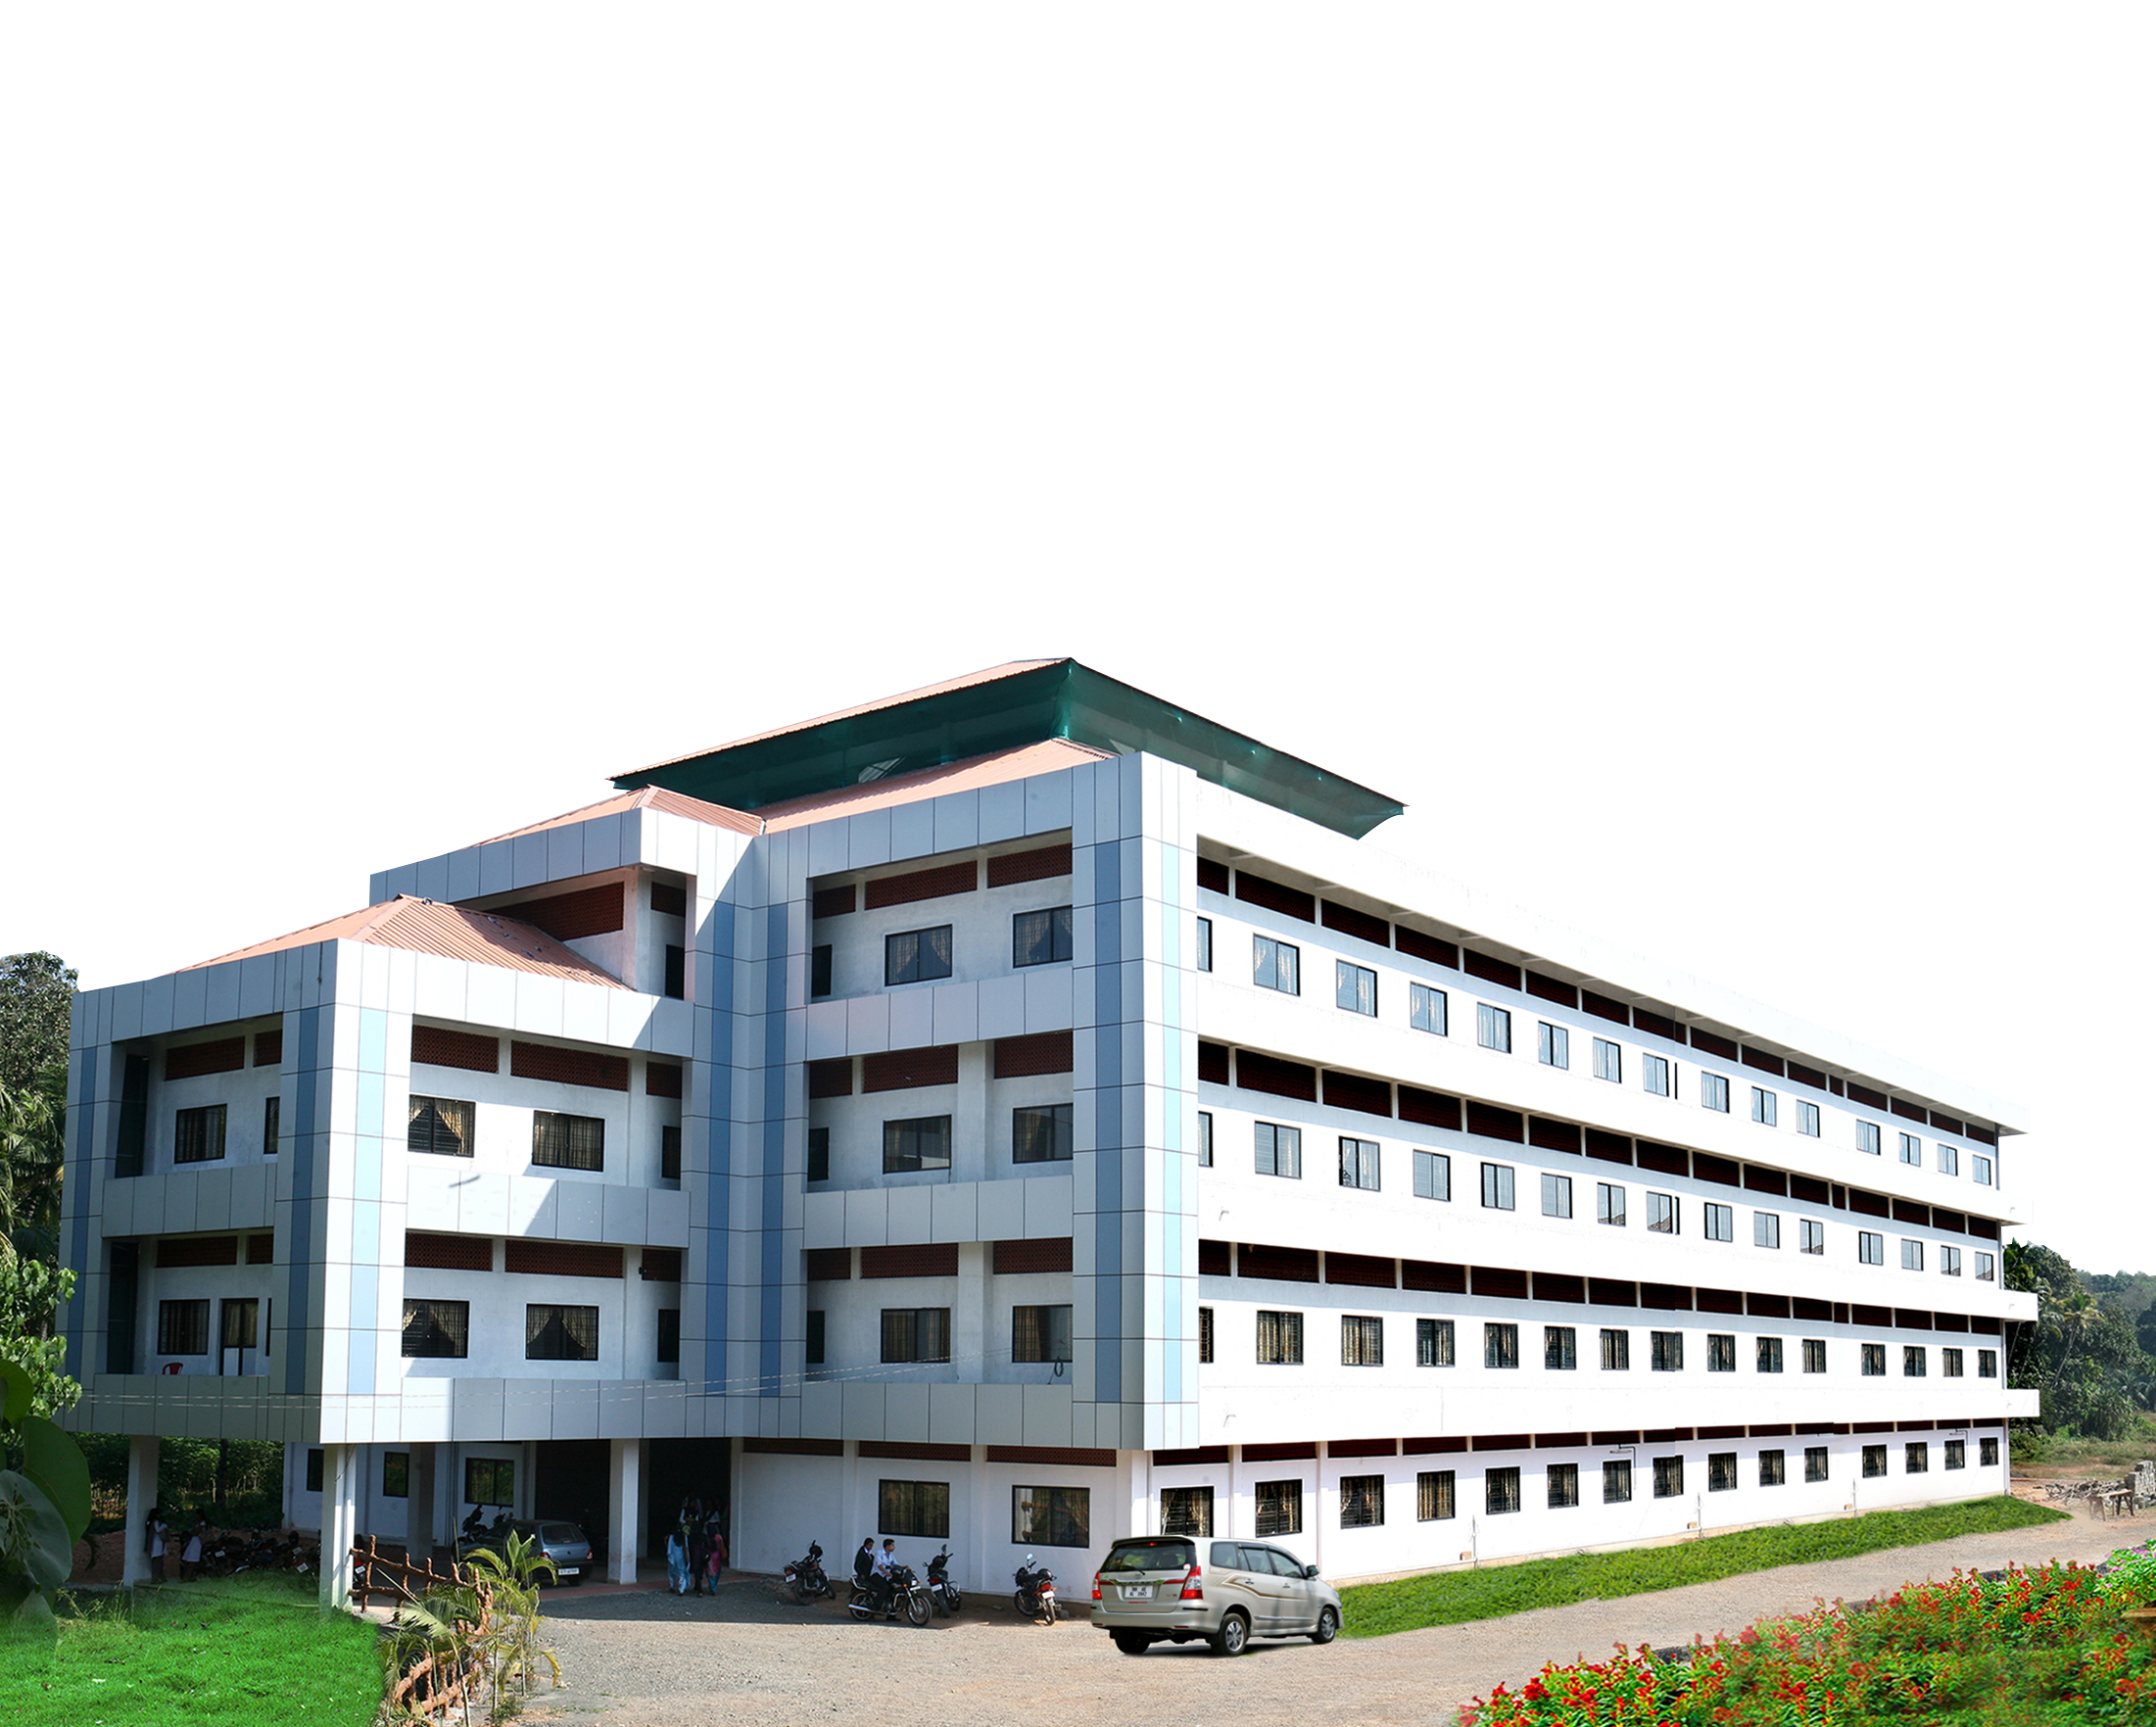 Jai Bharath Arts and Science College, Kochi Image